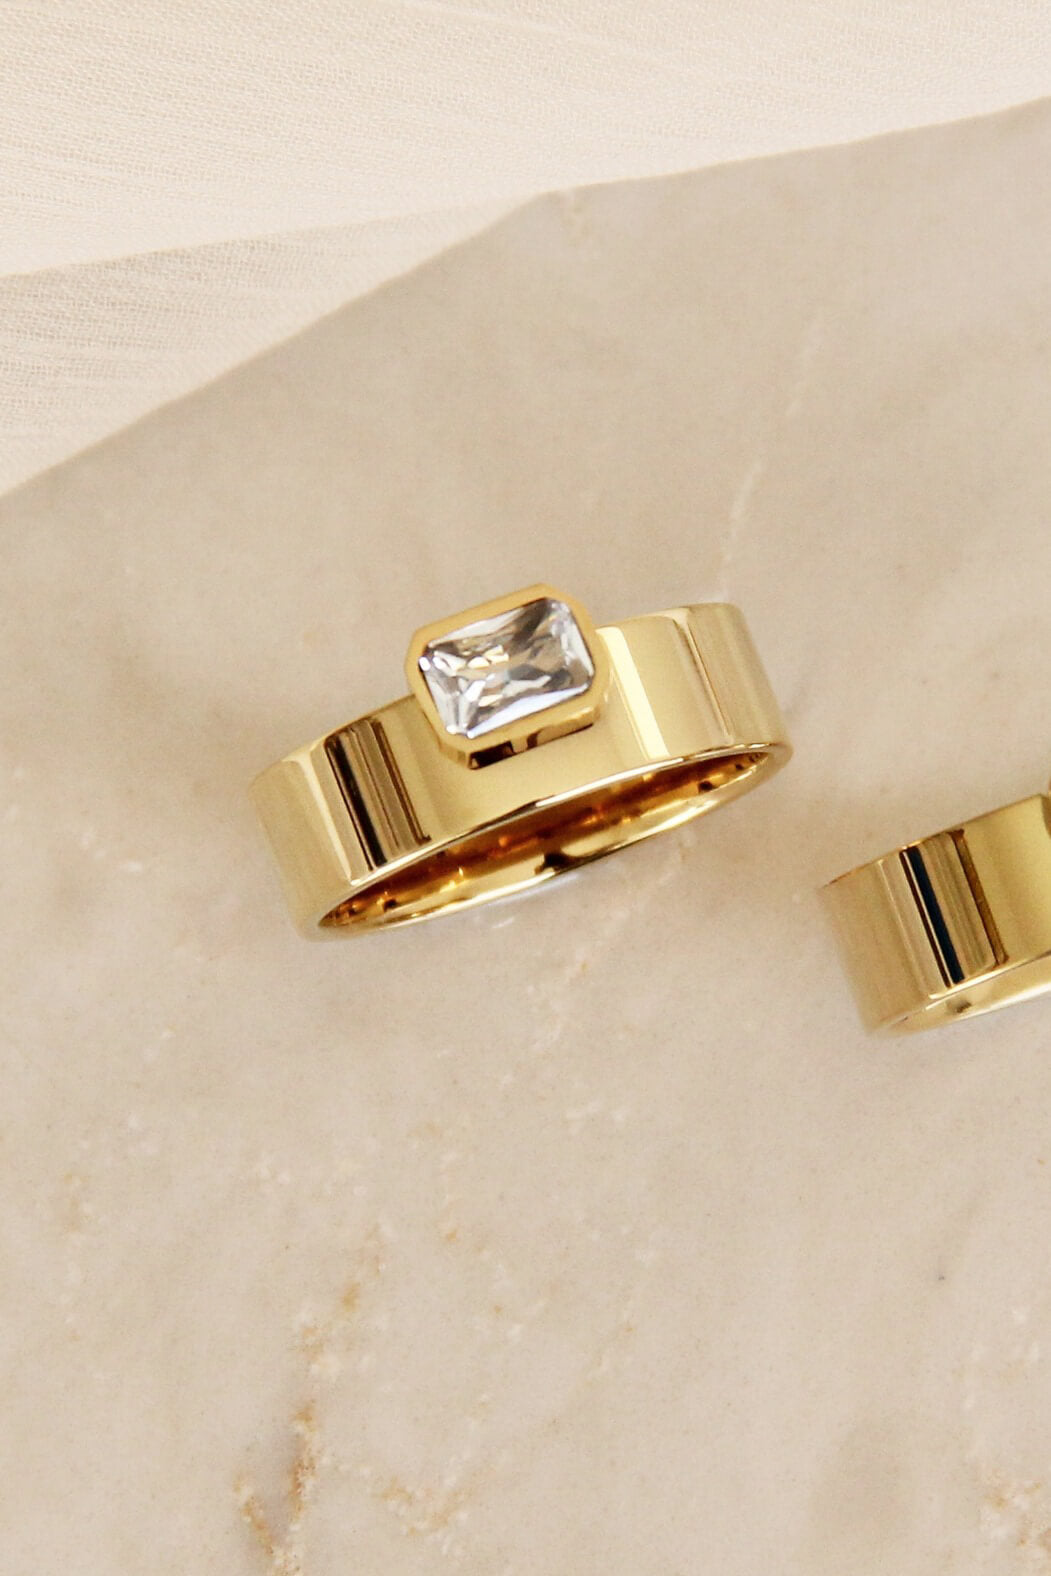 Maive Jewelry CZ emerald cut bezel band ring 